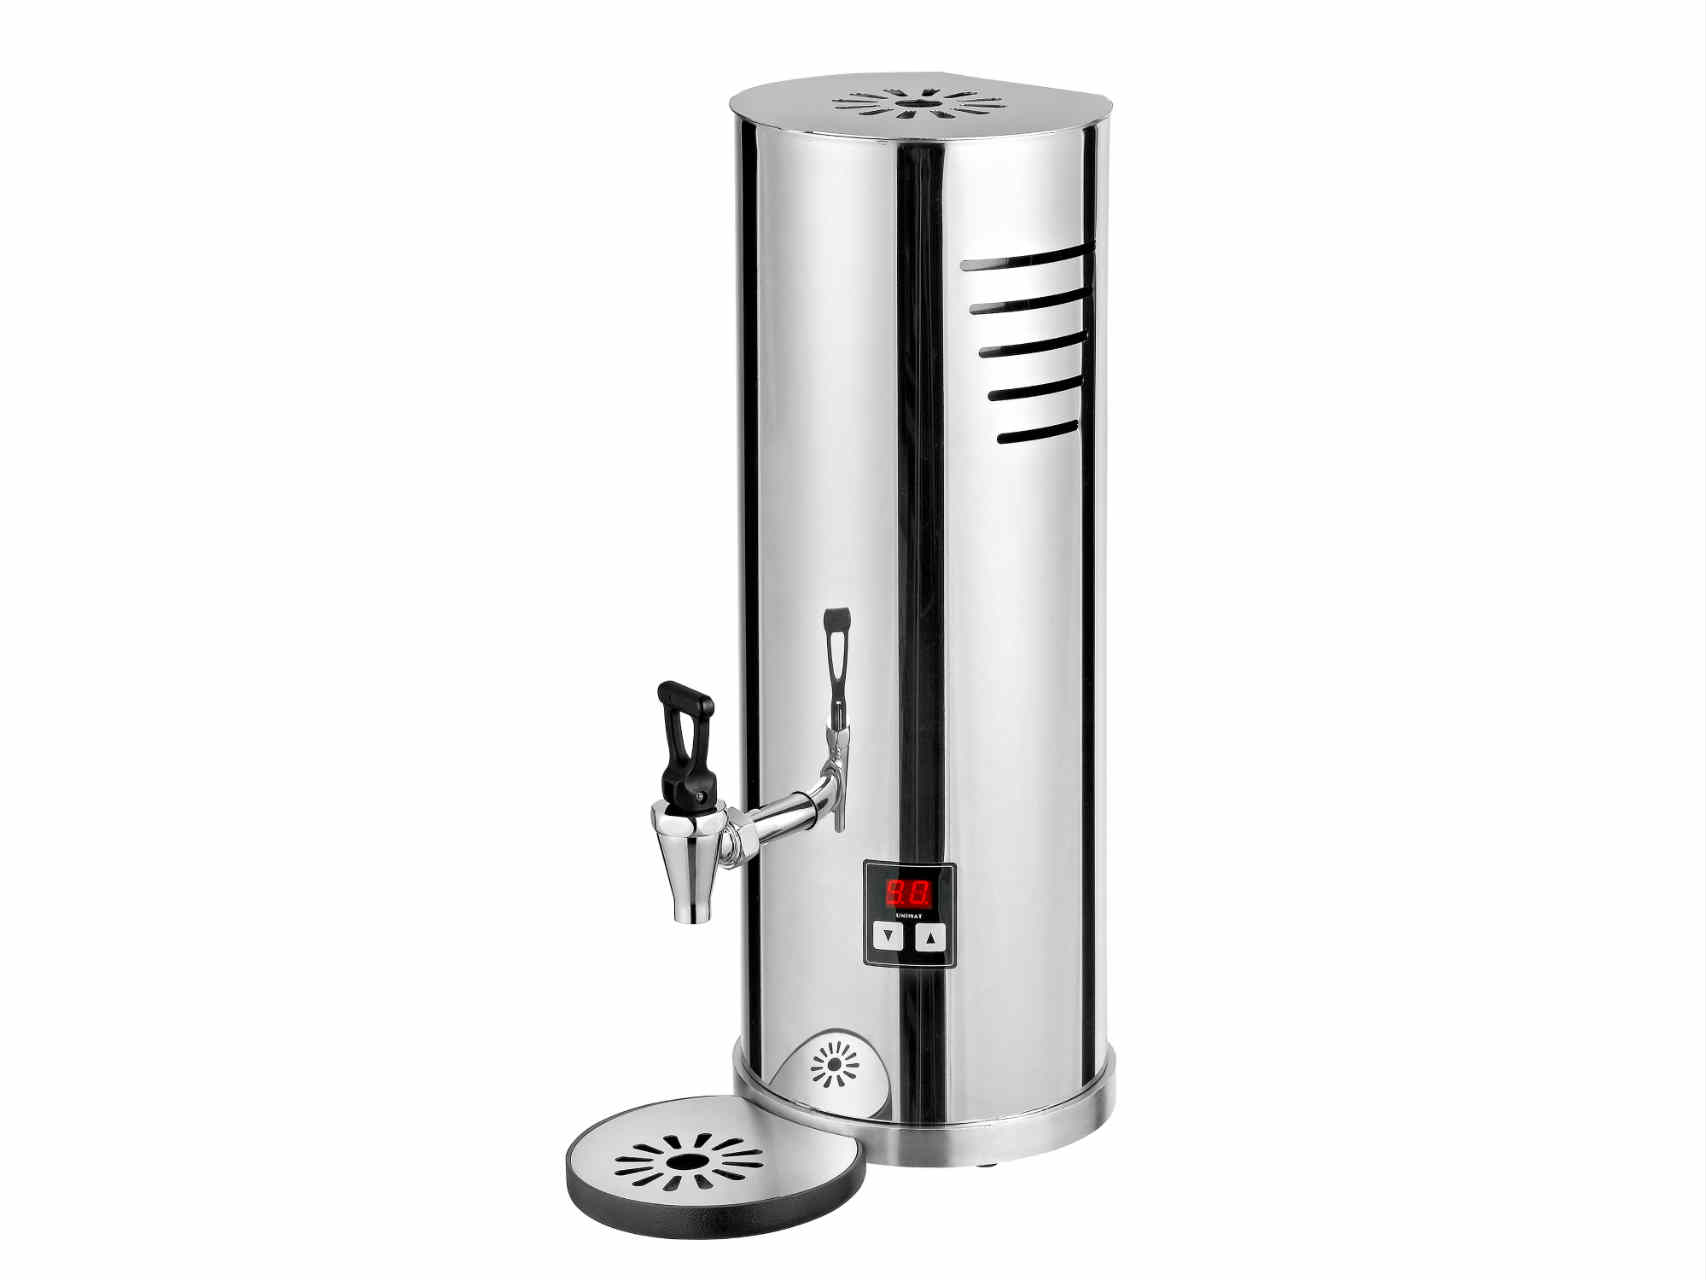 UNIMMAT Heißwasserbereiter Frankfurt Samowar, ) Watt, Teeautomat, Teemaschine (2100